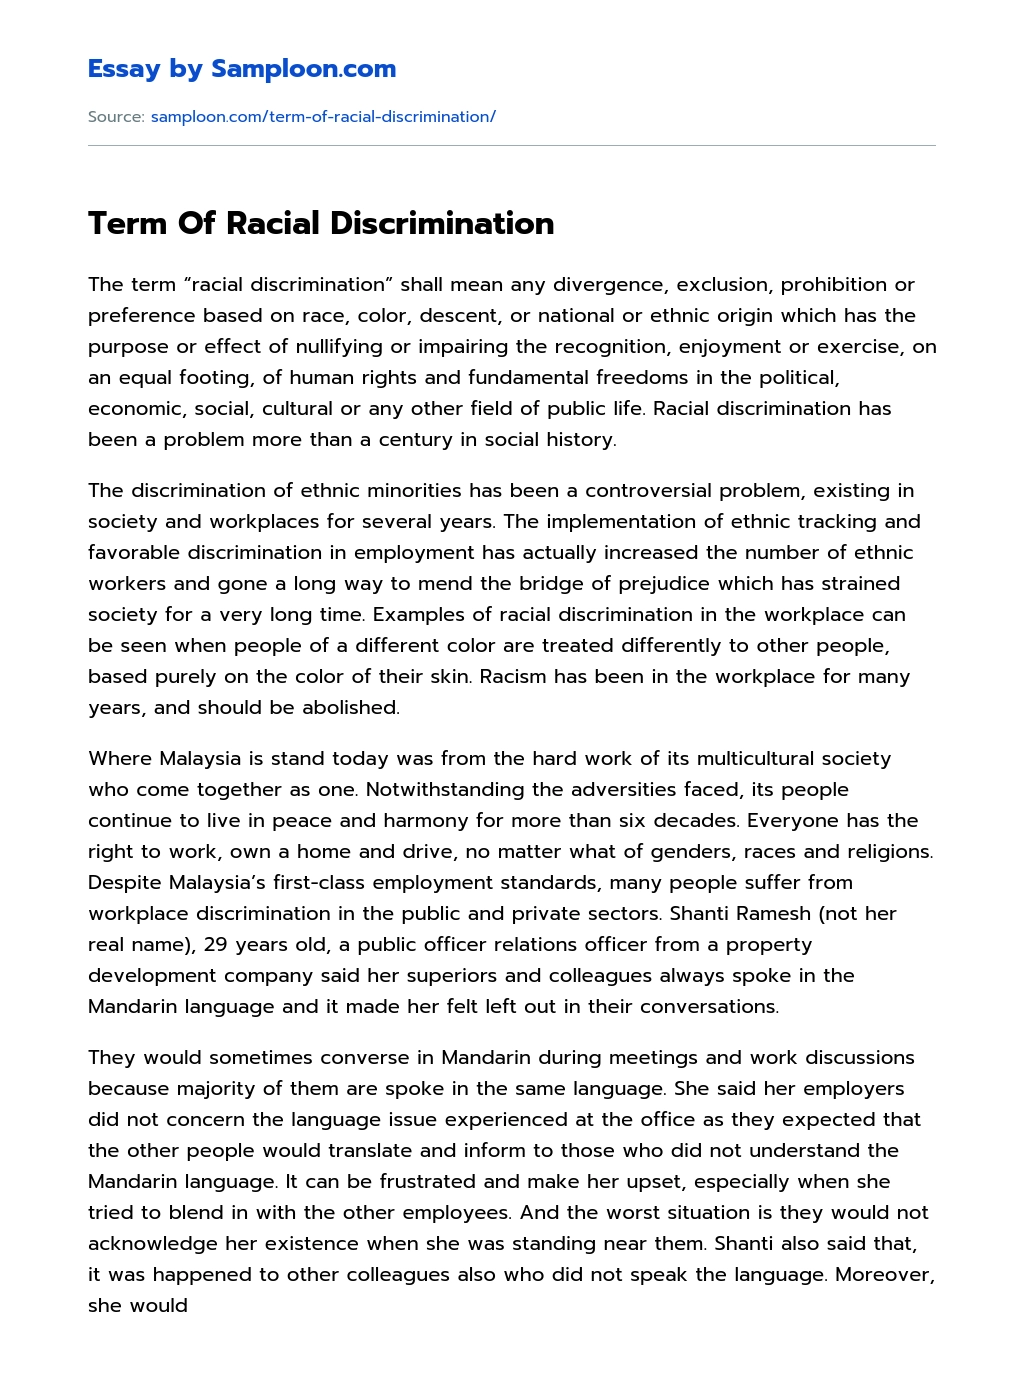 Term Of Racial Discrimination essay